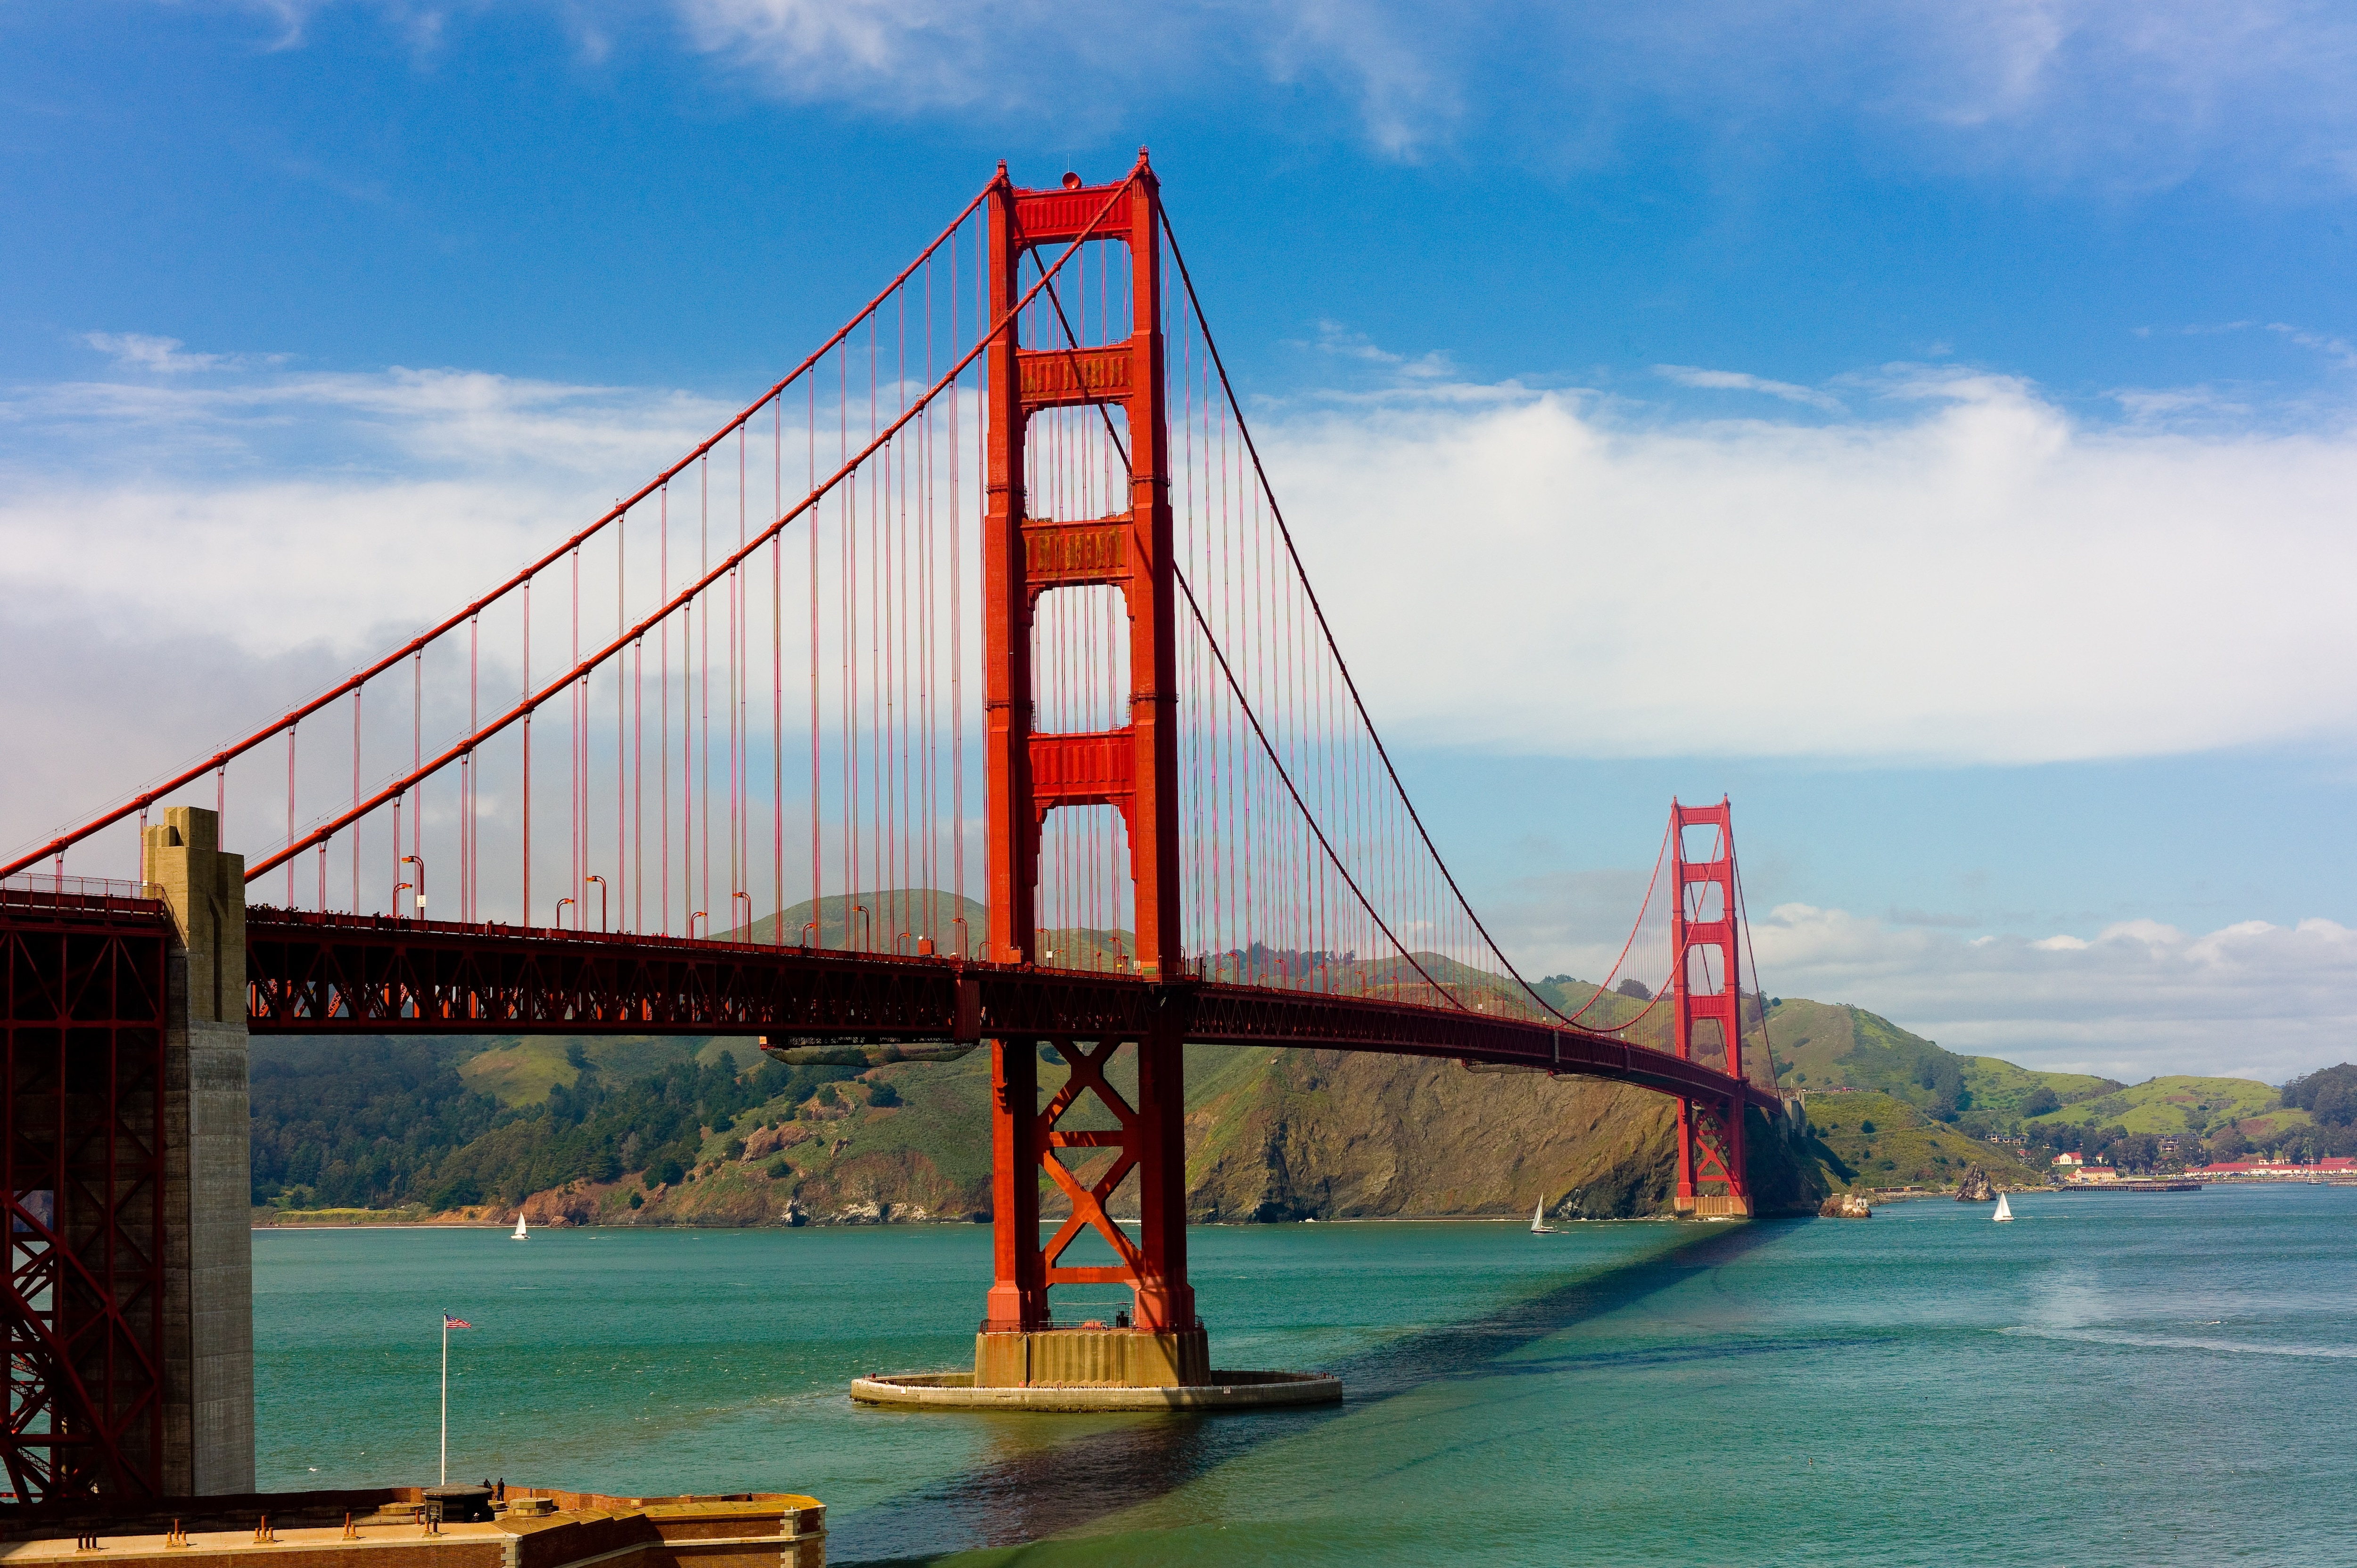 San. Лос Анджелес мост золотые ворота. Вантовый мост Сан Франциско. Мост Сан Матео в Сан-Франциско. Мост золотые ворота в Сан-Франциско фото.